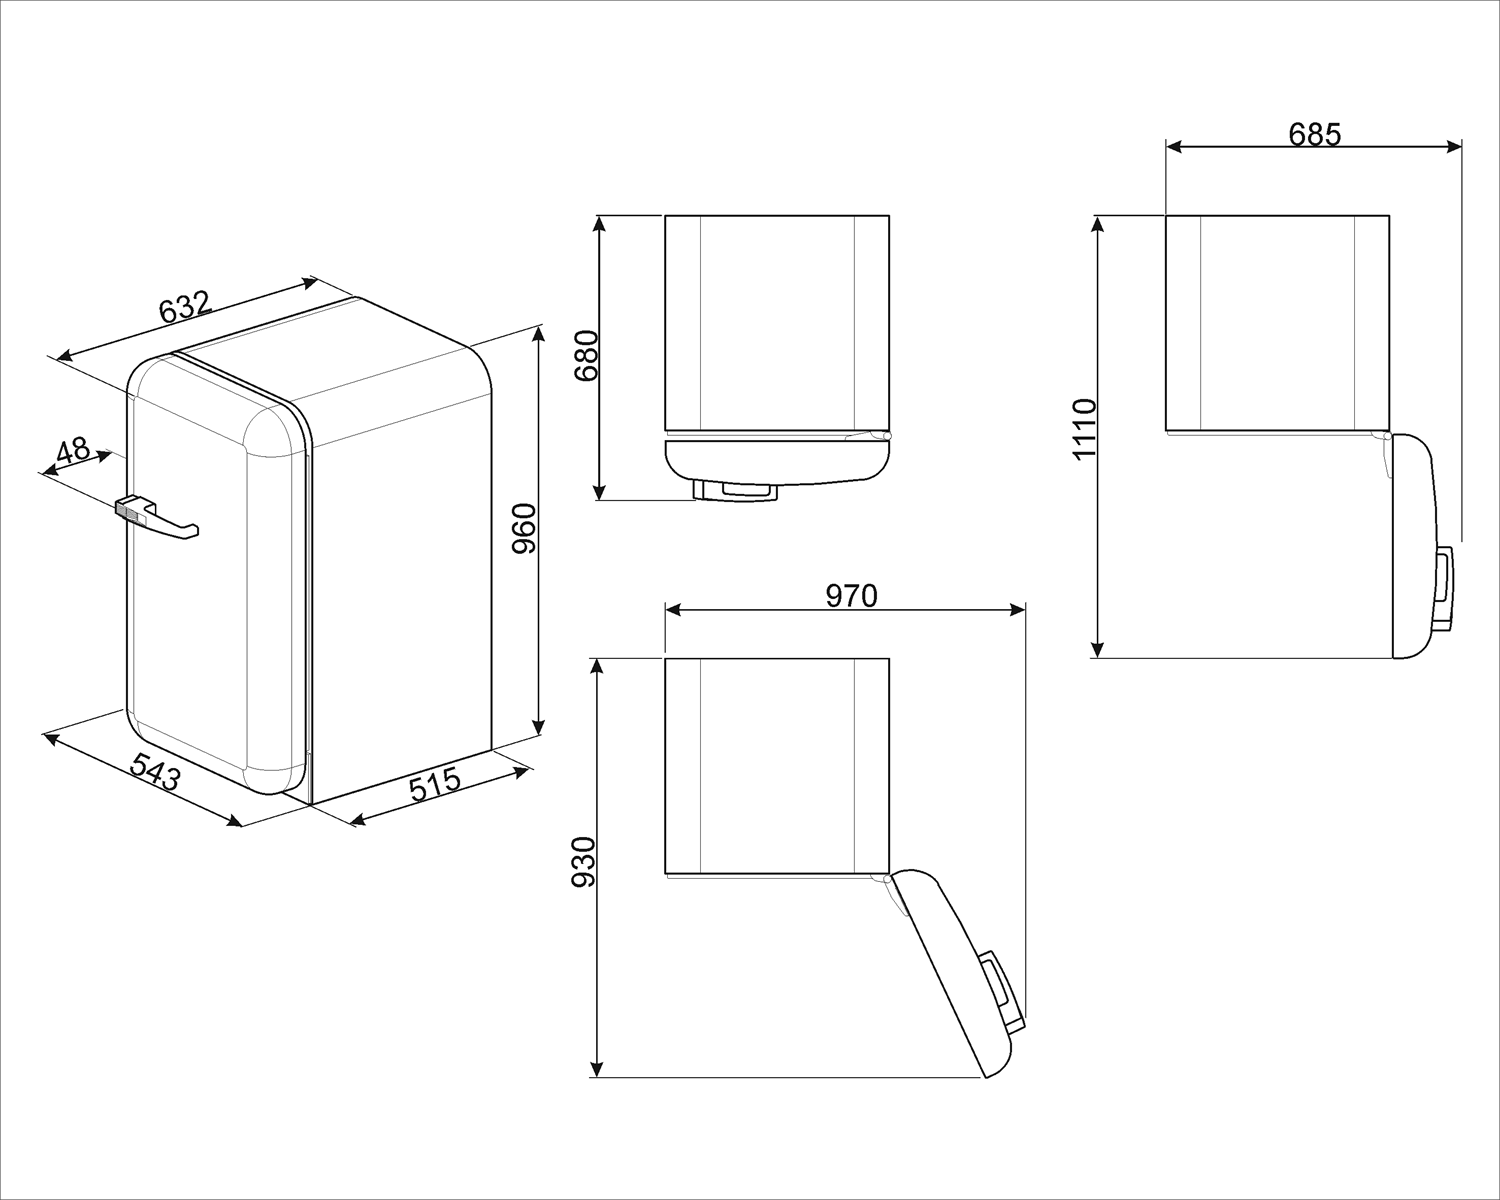 Maattekening SMEG koelkast tafelmodel tricolore FAB10HLIT